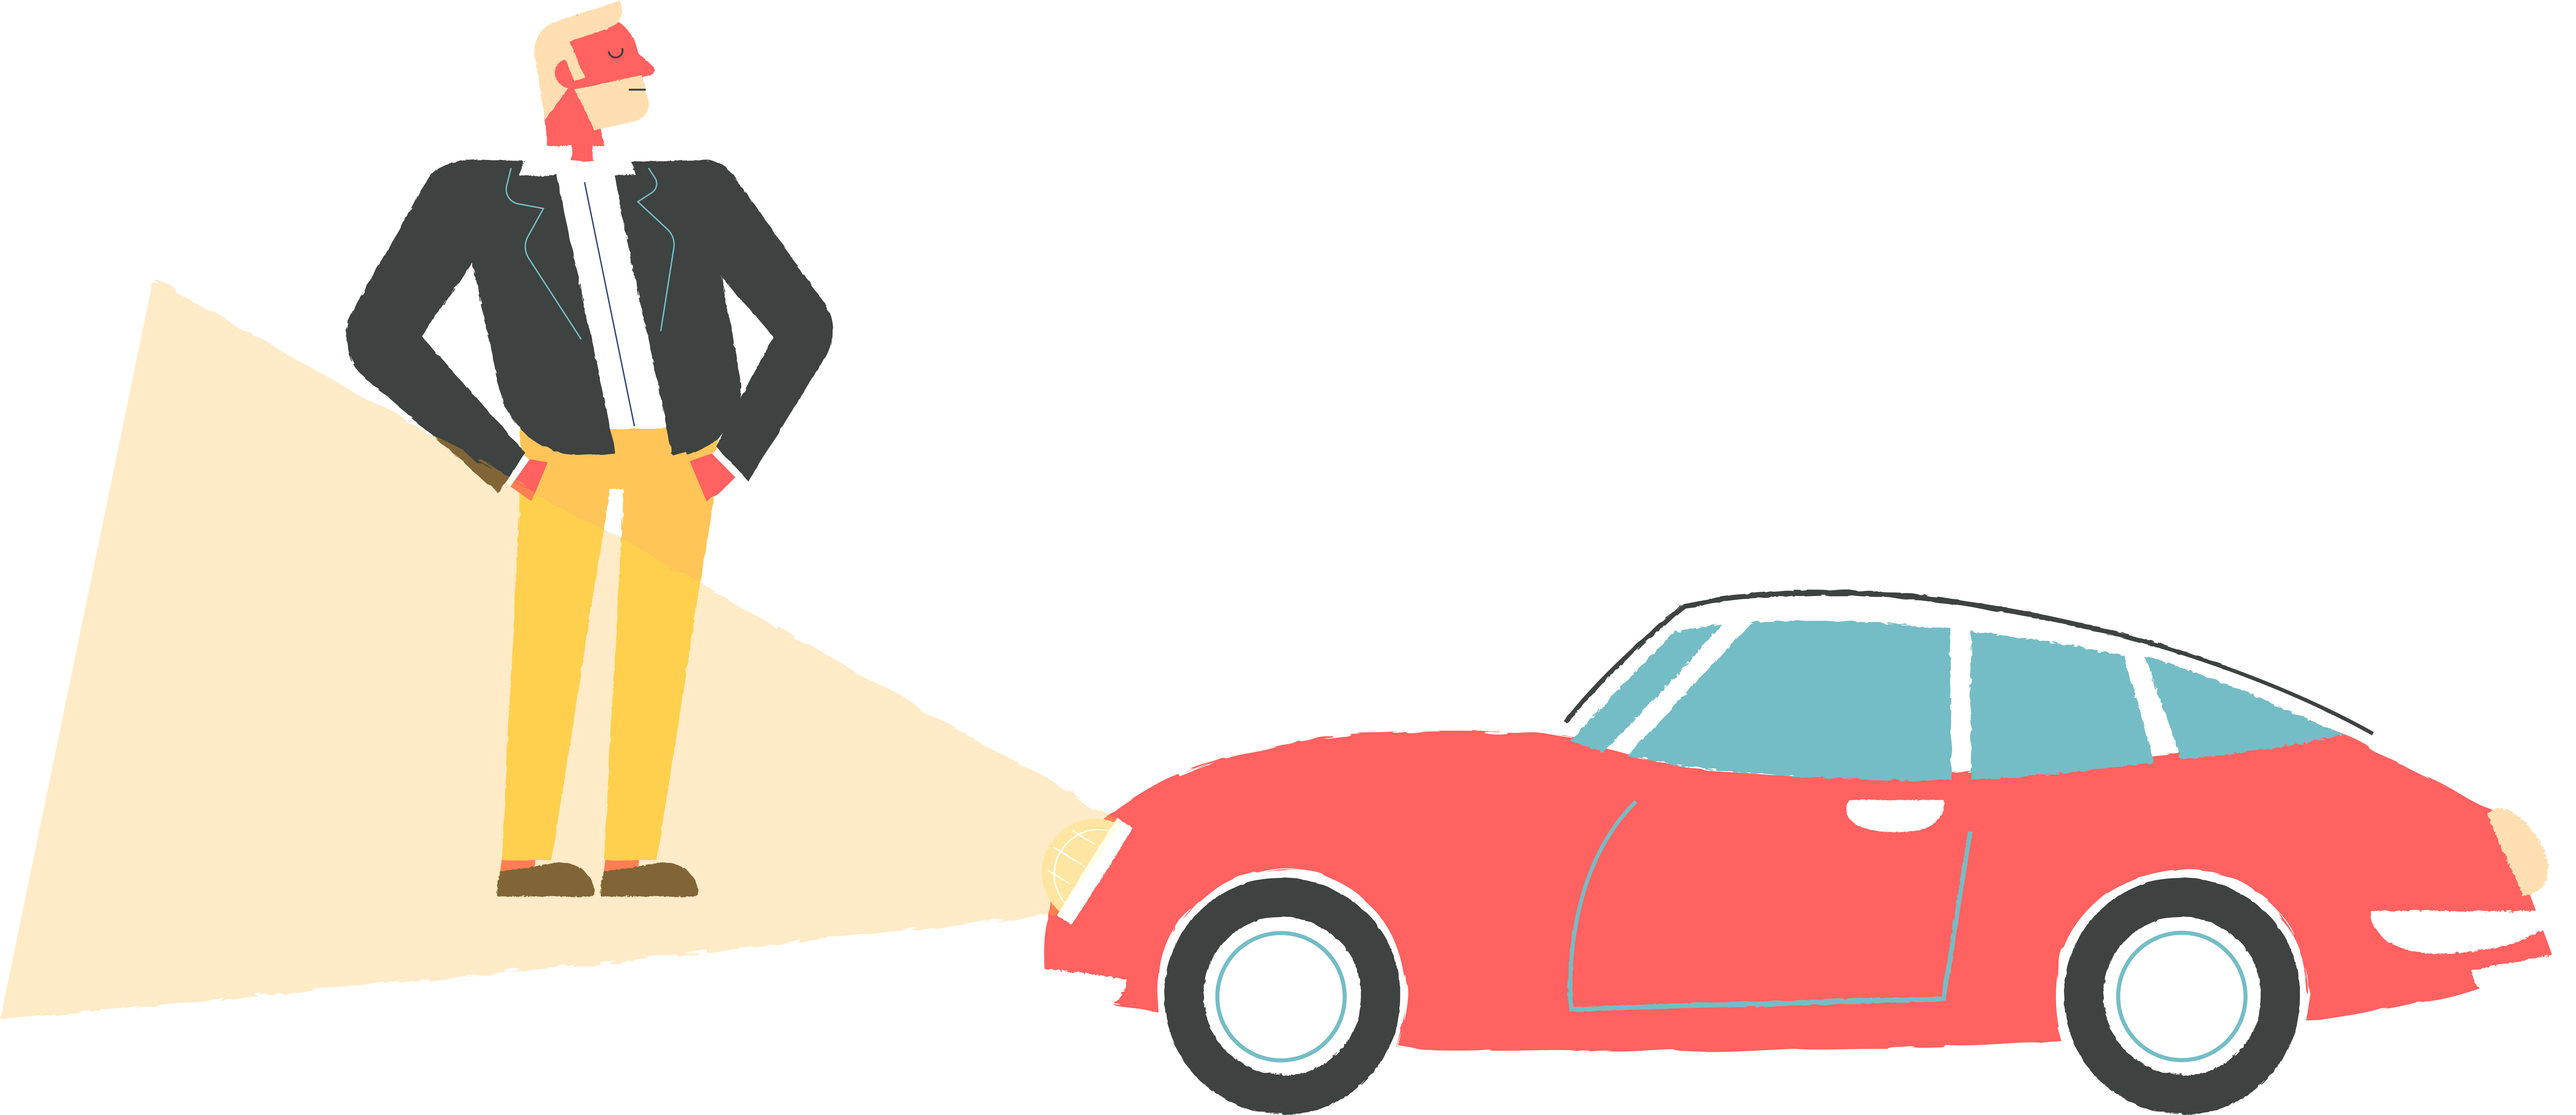 A Cartoon Of A Man Standing Next To A Red Car